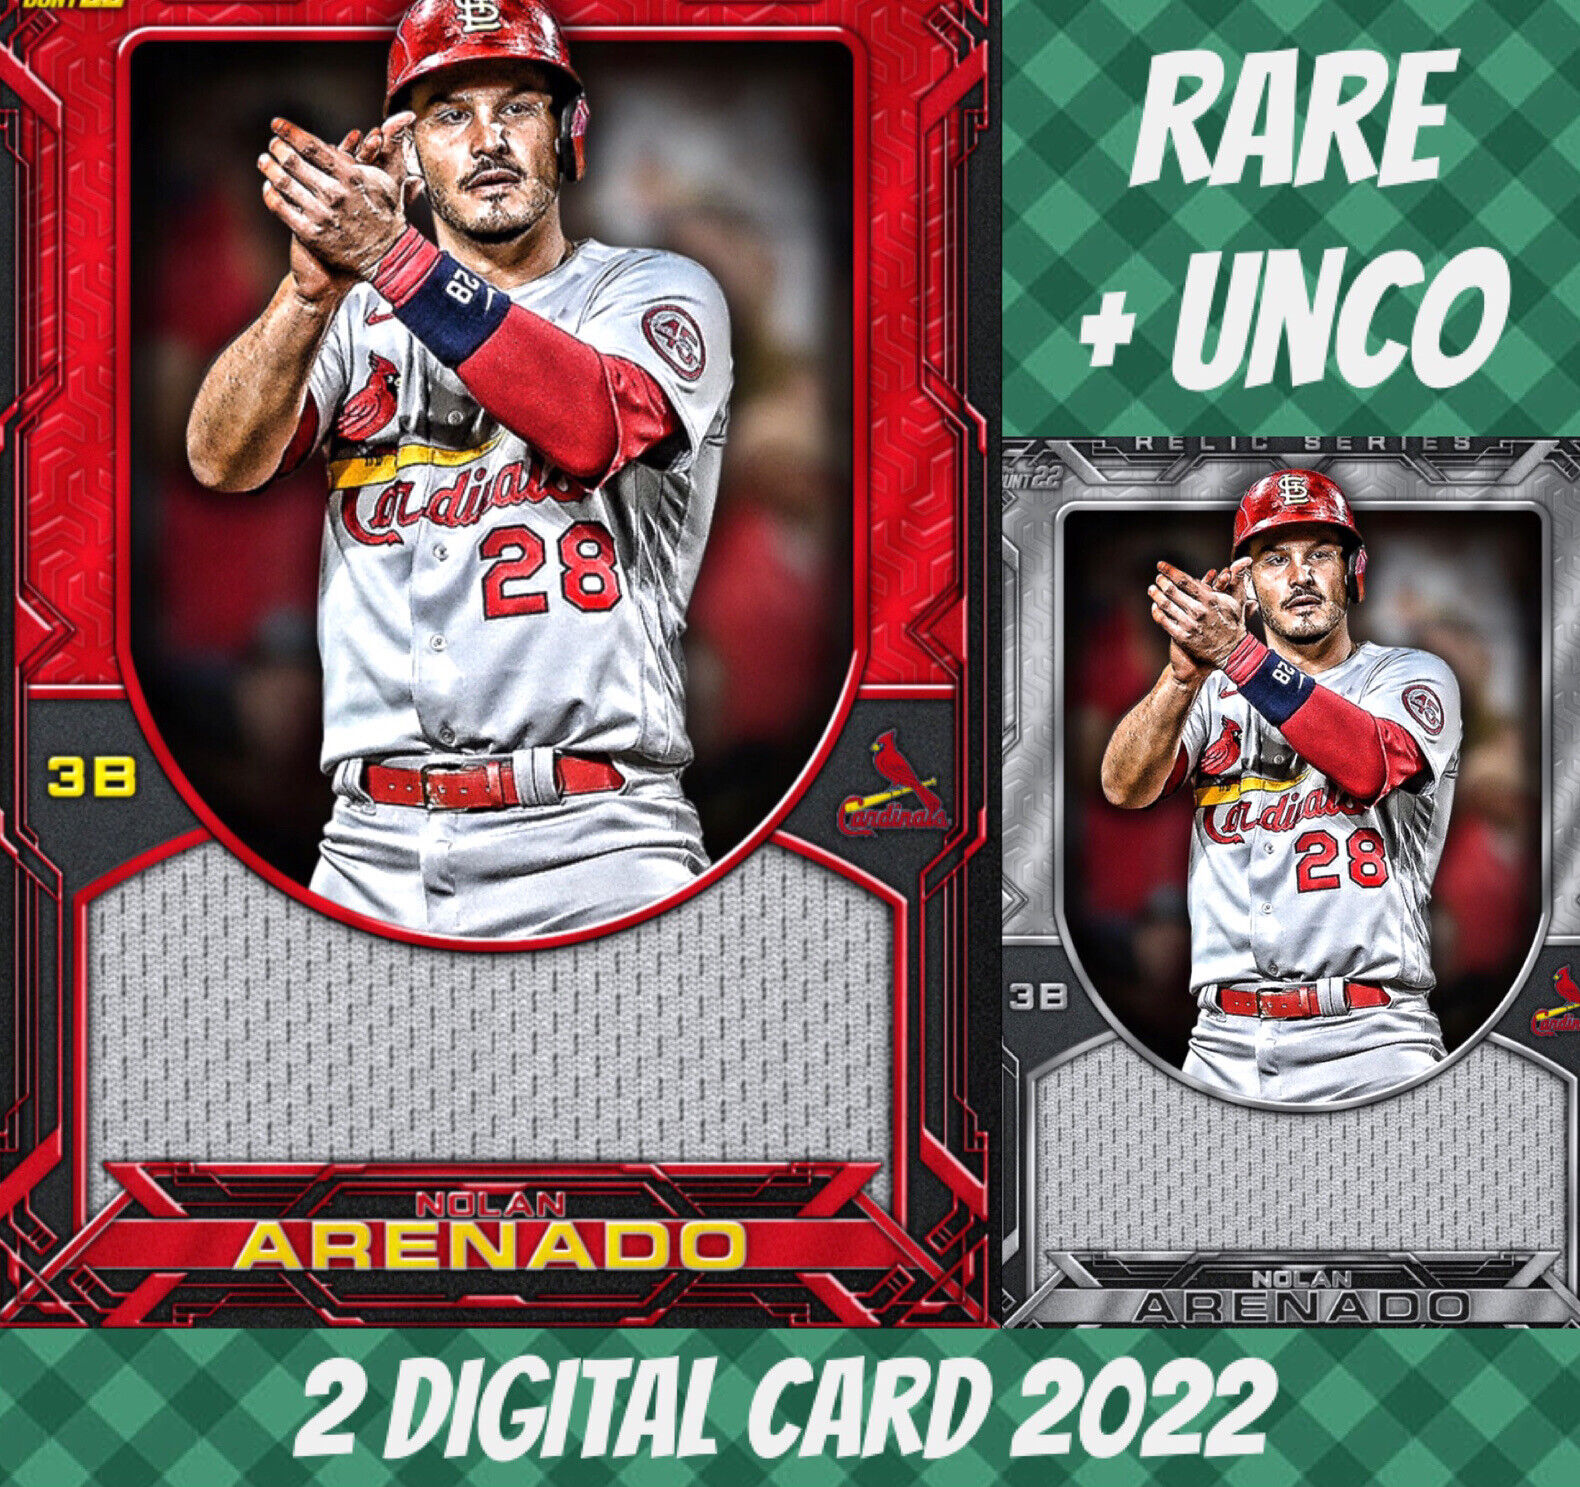 Topps Bunt 22 Nolan Arenado Rare Unco Relic Series S/1 2022 Digital Card